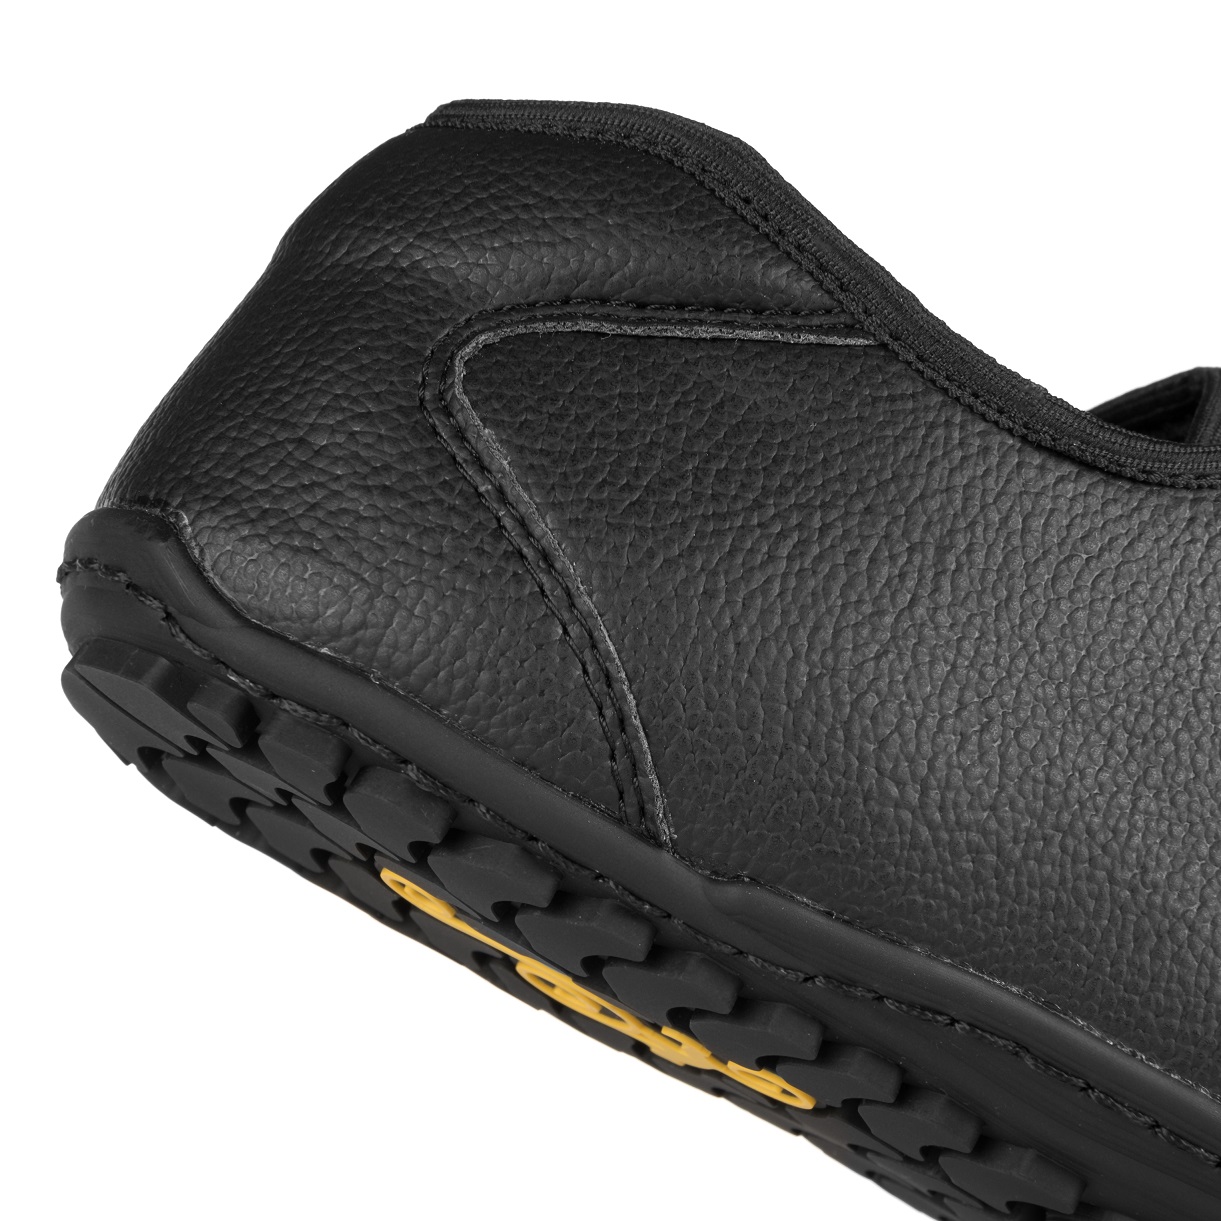 BAREFOOT BOSQUE color NEGRO con forro negro, suelas Vibram SUPERNEWFLEX​ de  6mm de grosor, zapatos Barefoot para mujer y hombre, calzado Barefoot,  zapato veganos, eco-friendly, barefoot.: 105,00 € - BIOWORLD SHOES